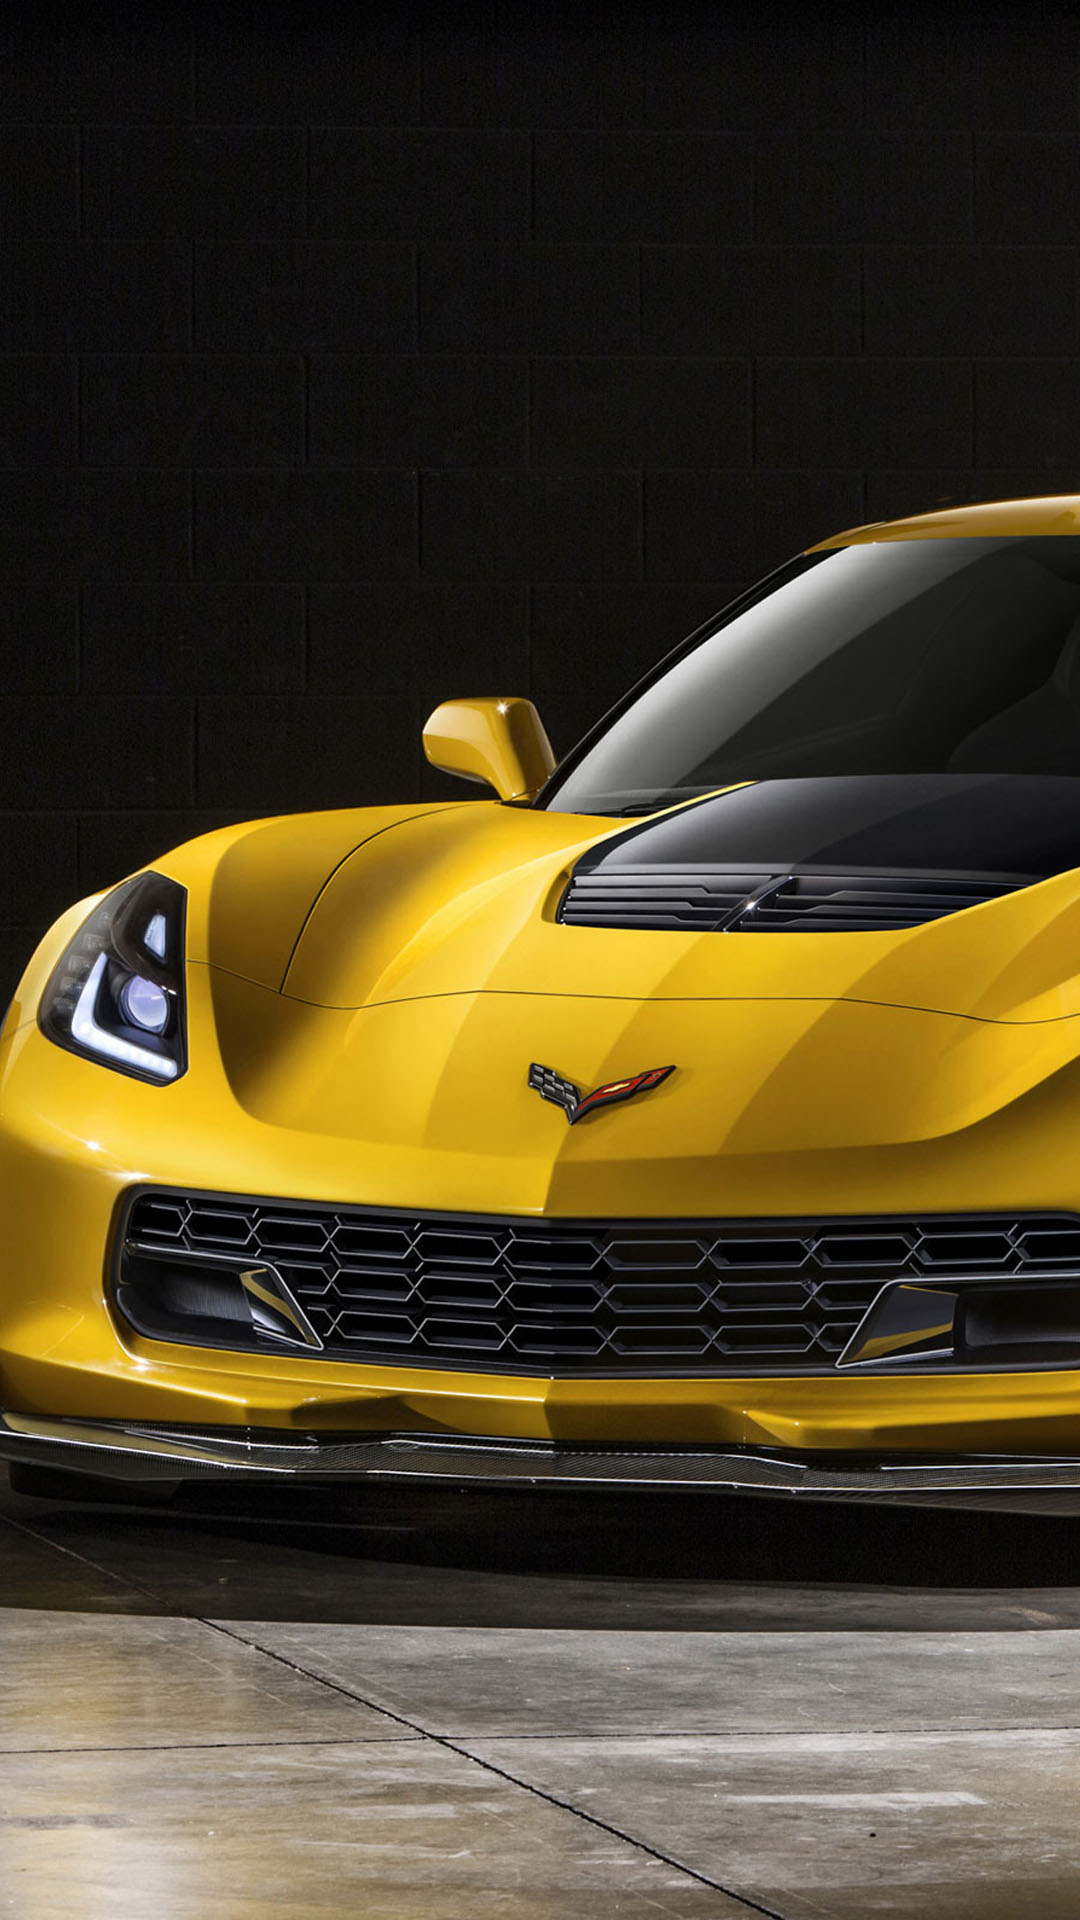 Chevrolet Corvette Z06 Yellow Best Htc One Wallpaper